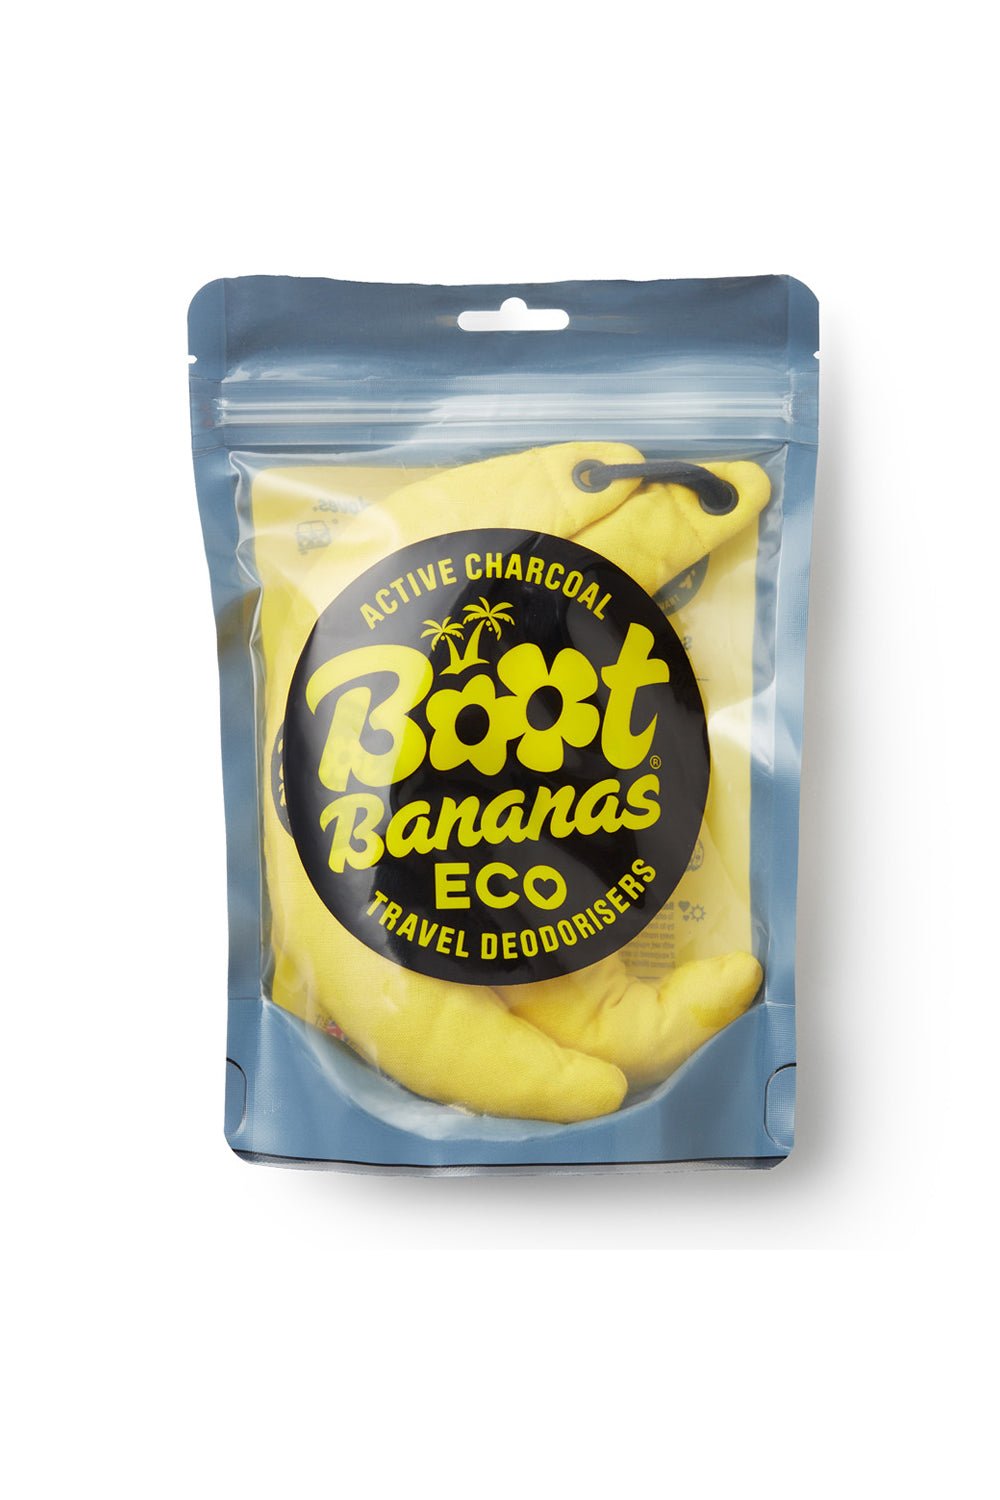 Boot Bananas Eco Travel Deodorisers | Coffee Outdoors